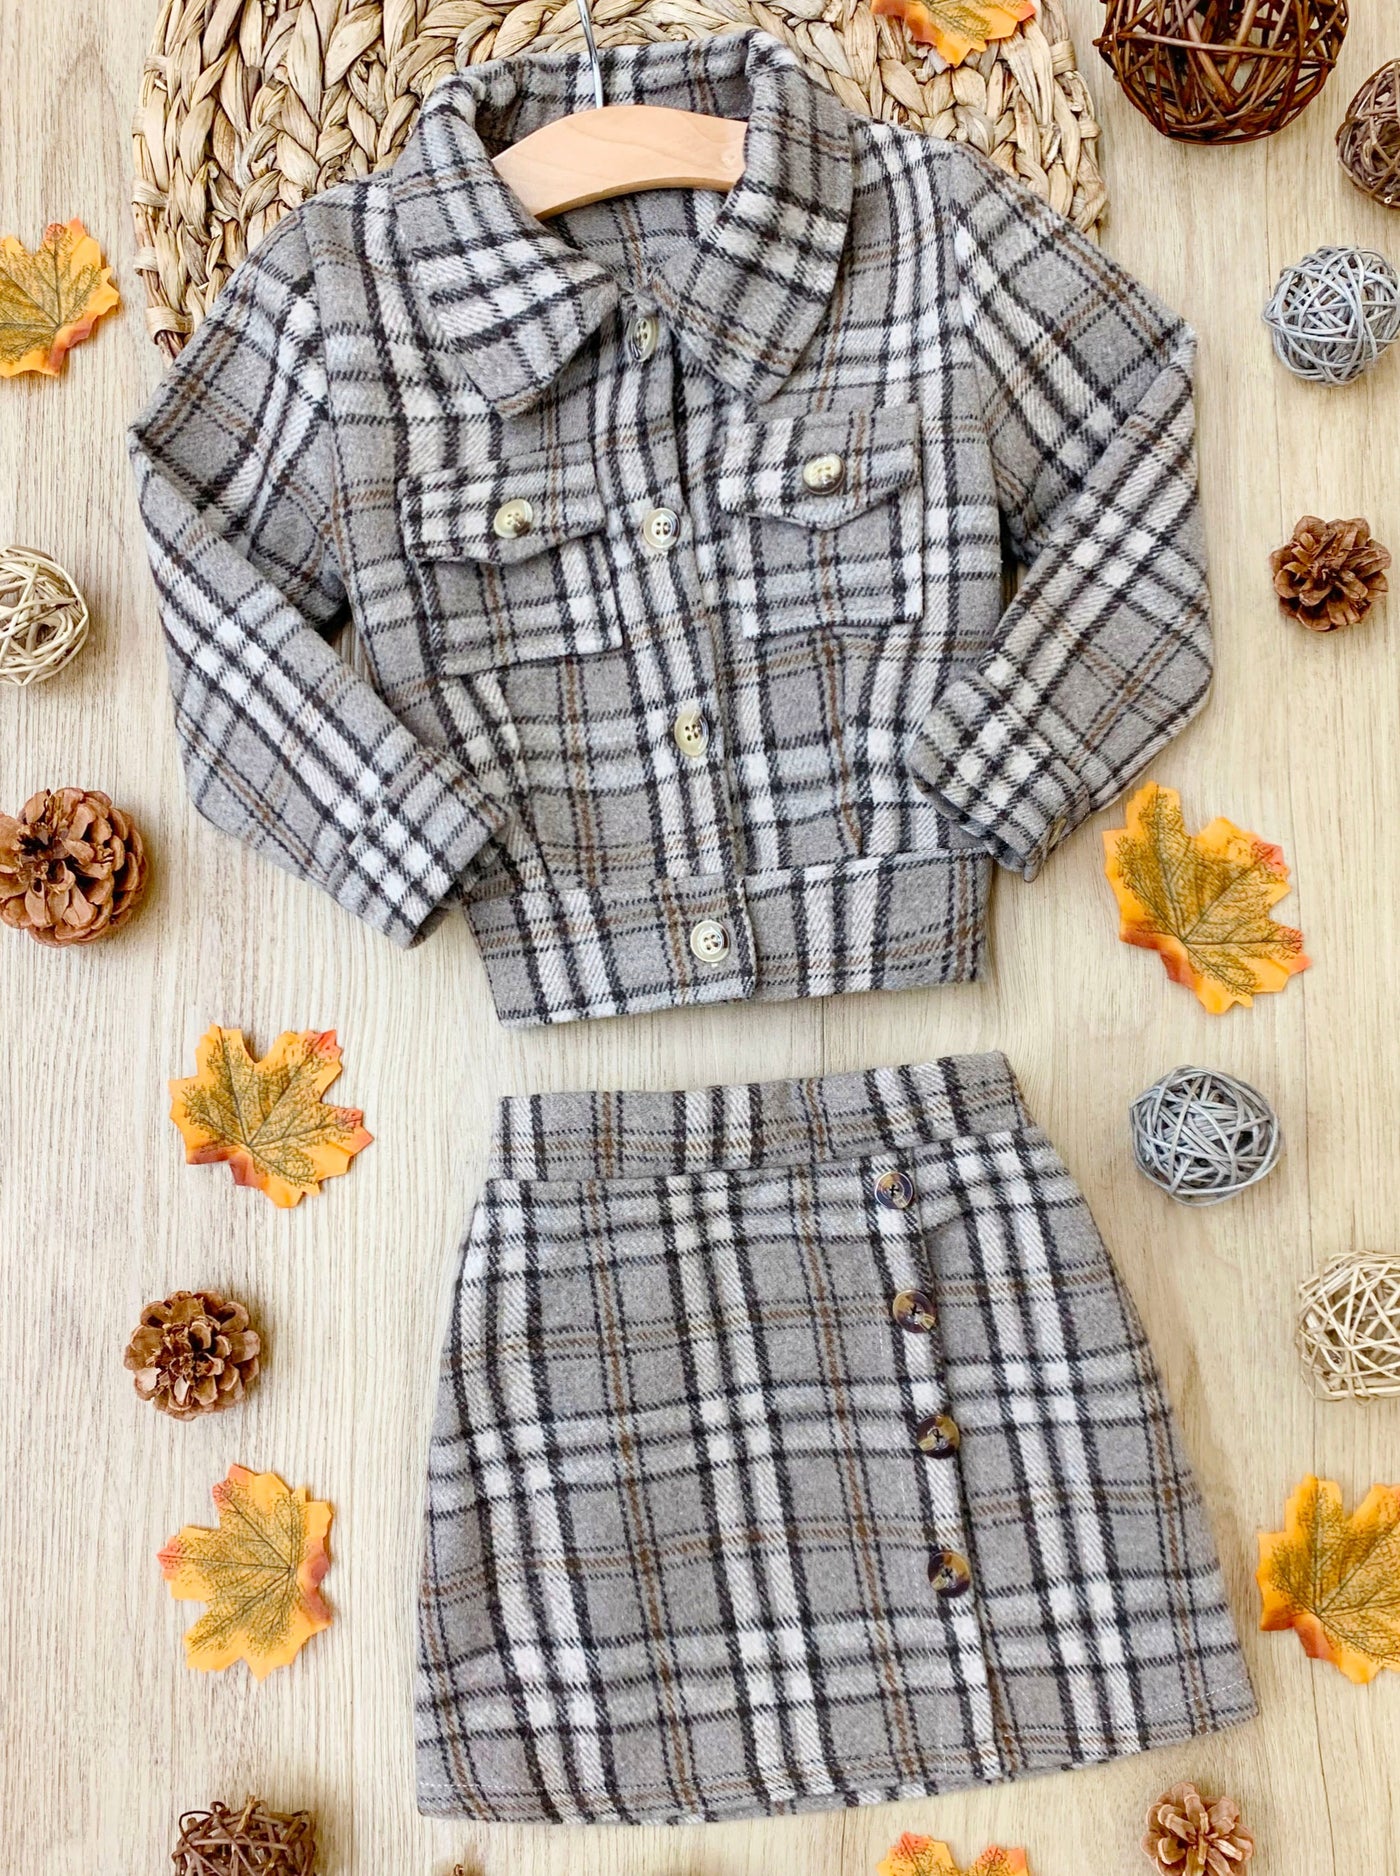 Toddler Clothing Sale | Plaid Jacket & Skirt Set | Mia Belle Girls